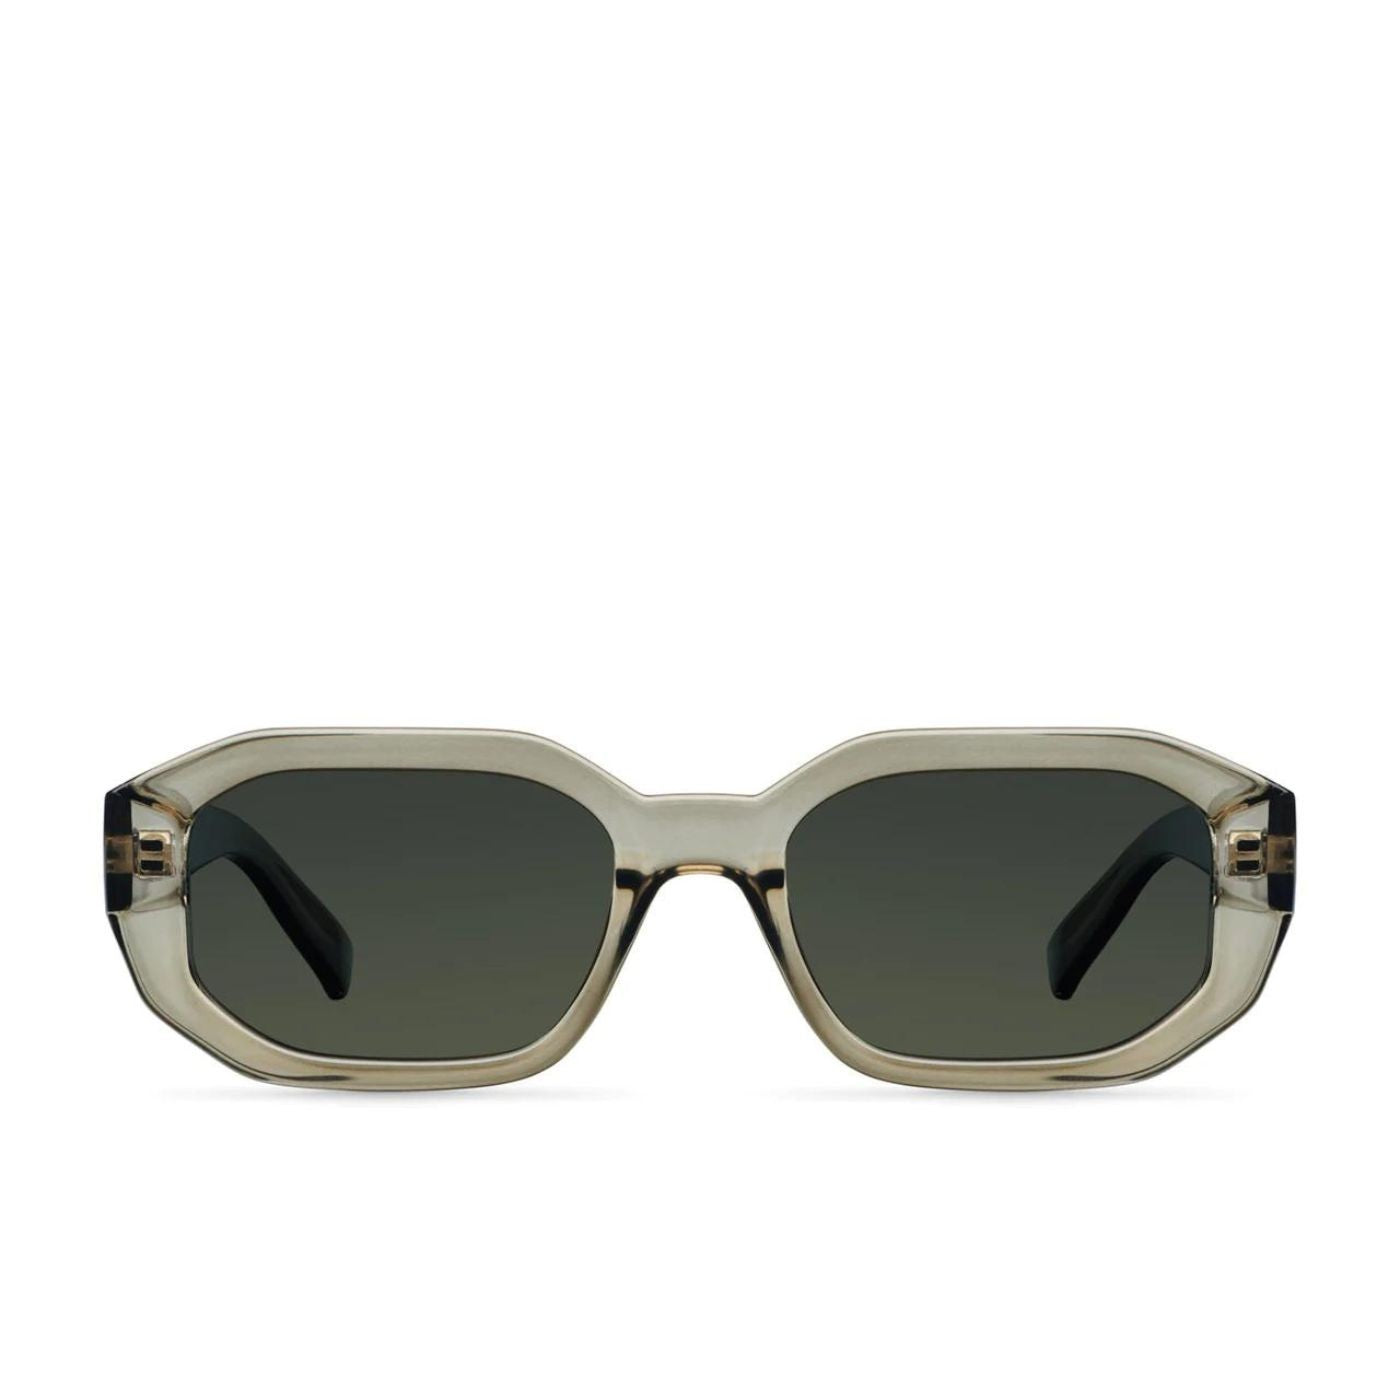 Kessie Stone Olive Meller sunglasses